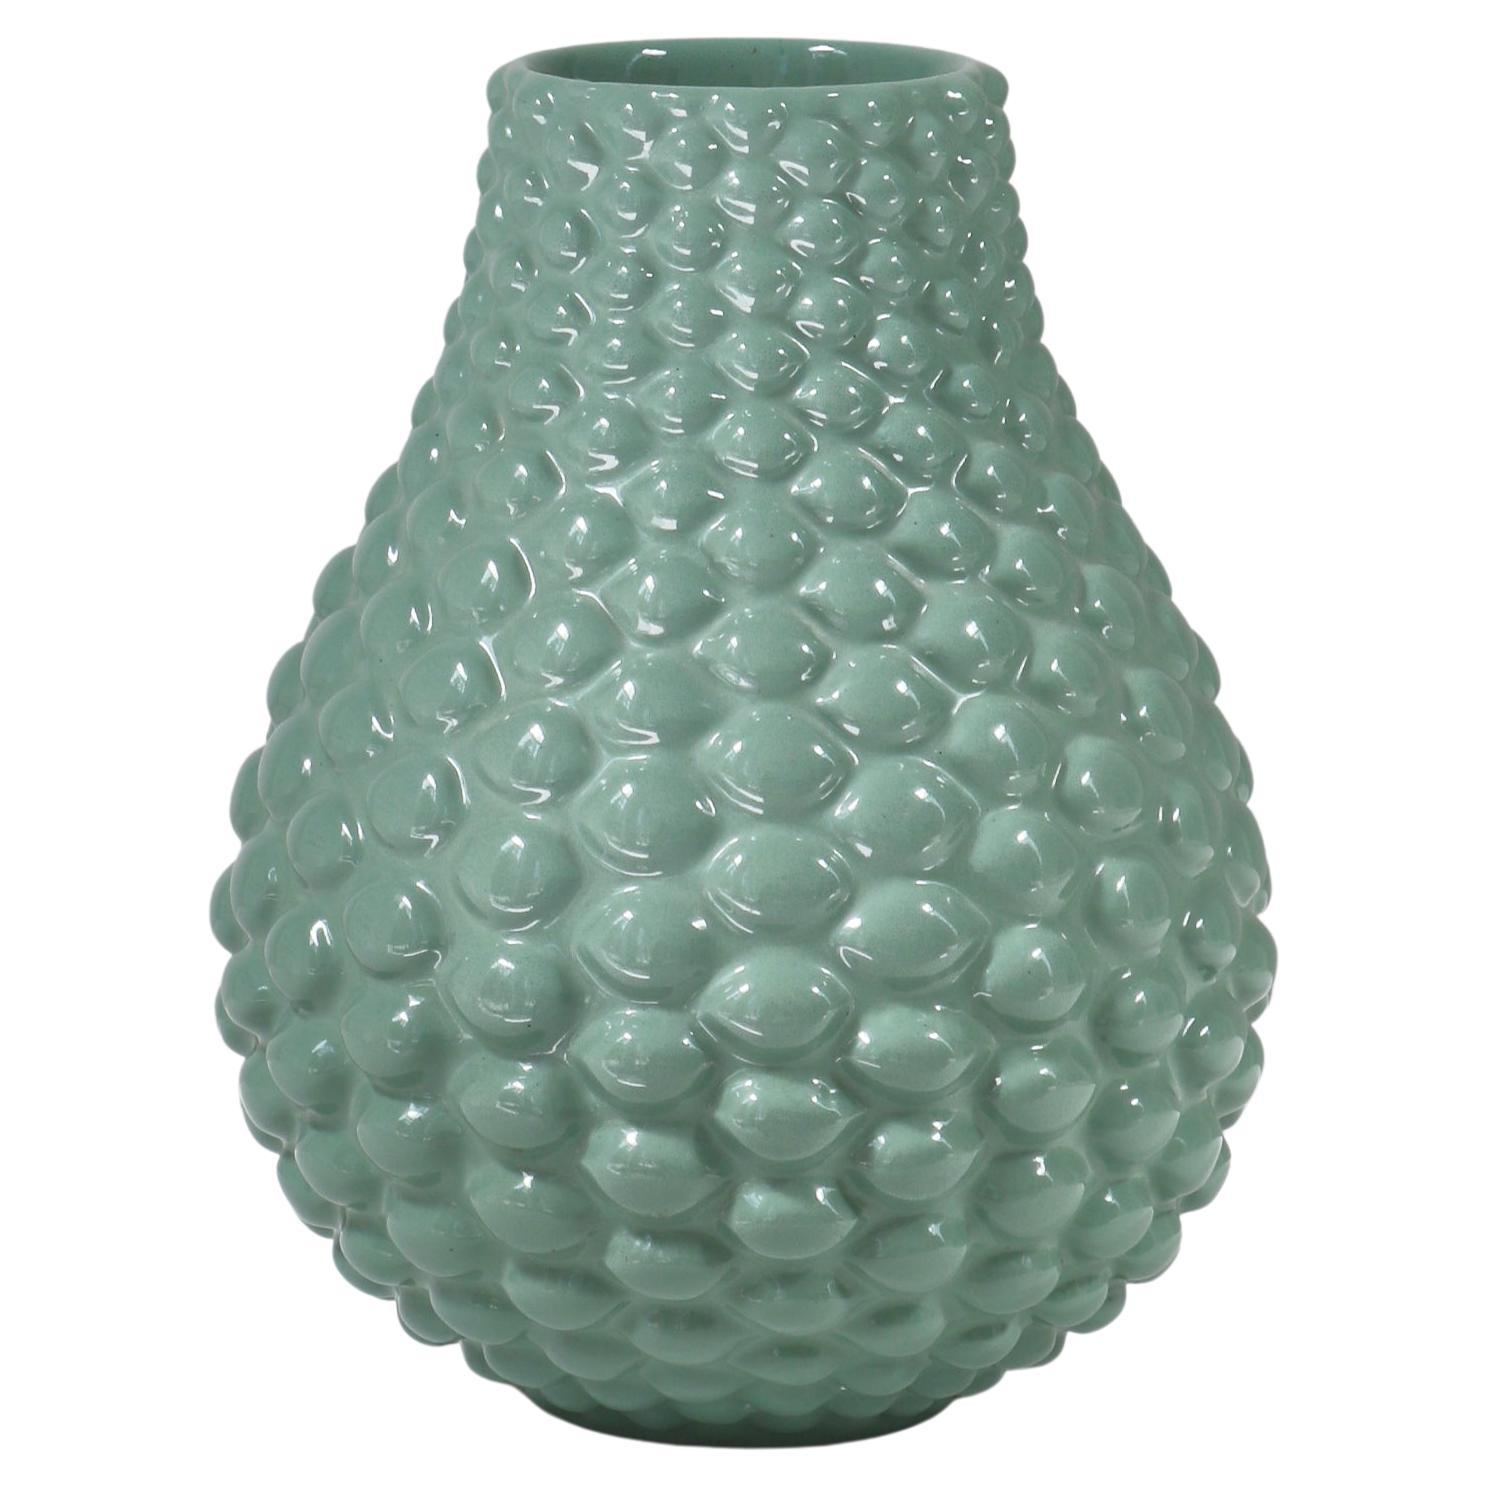 Axel Salto Budded Stoneware Vase Celadon Glazing "Ipsens", Denmark, 1930s